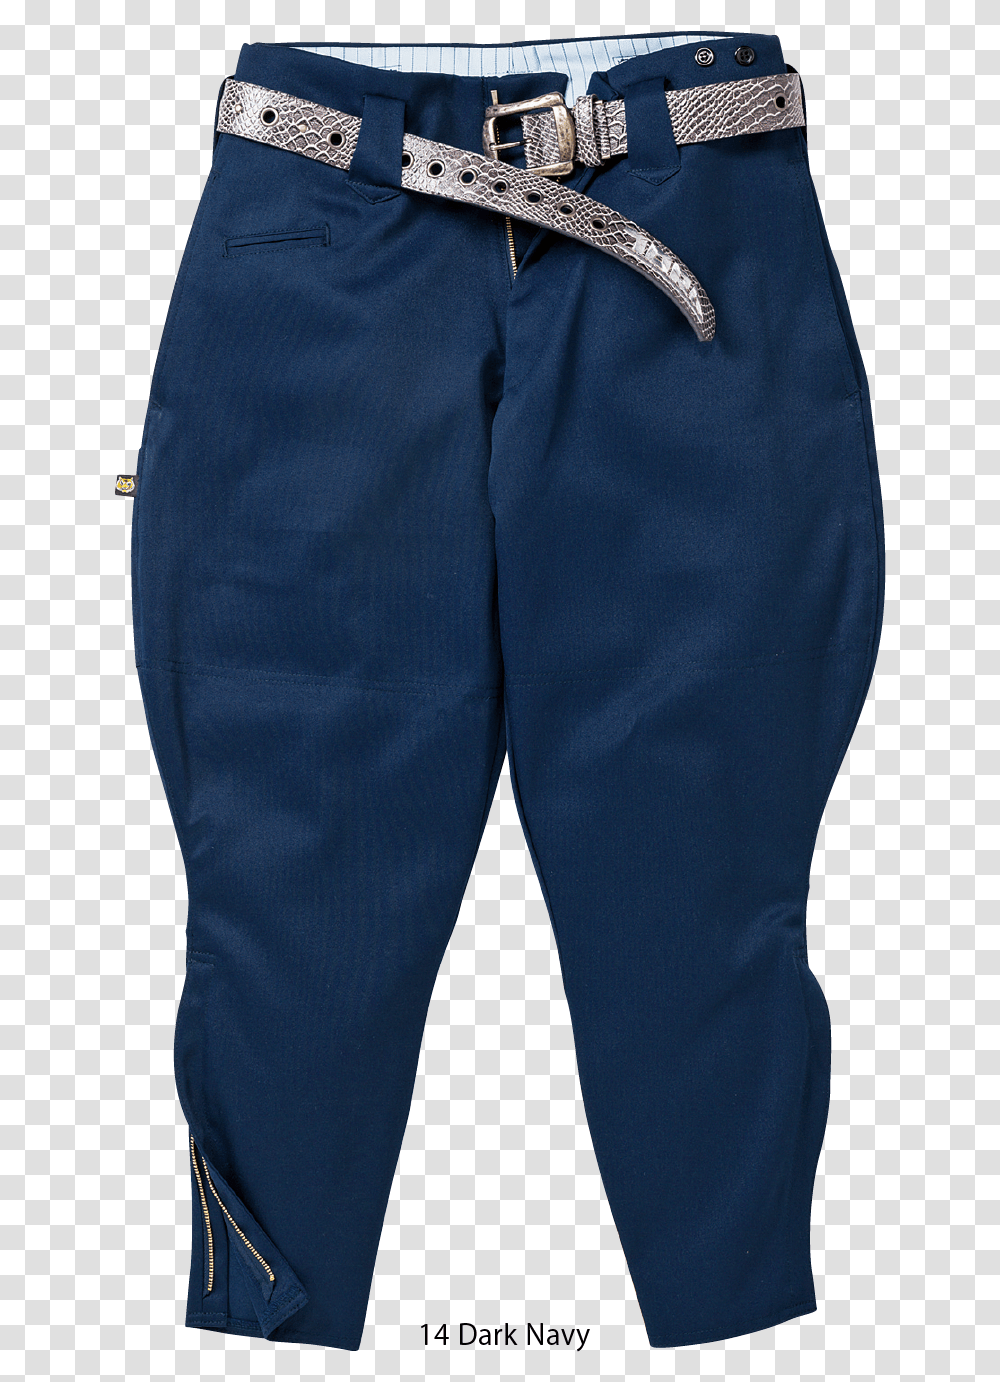 Pocket, Pants, Shorts, Jeans Transparent Png